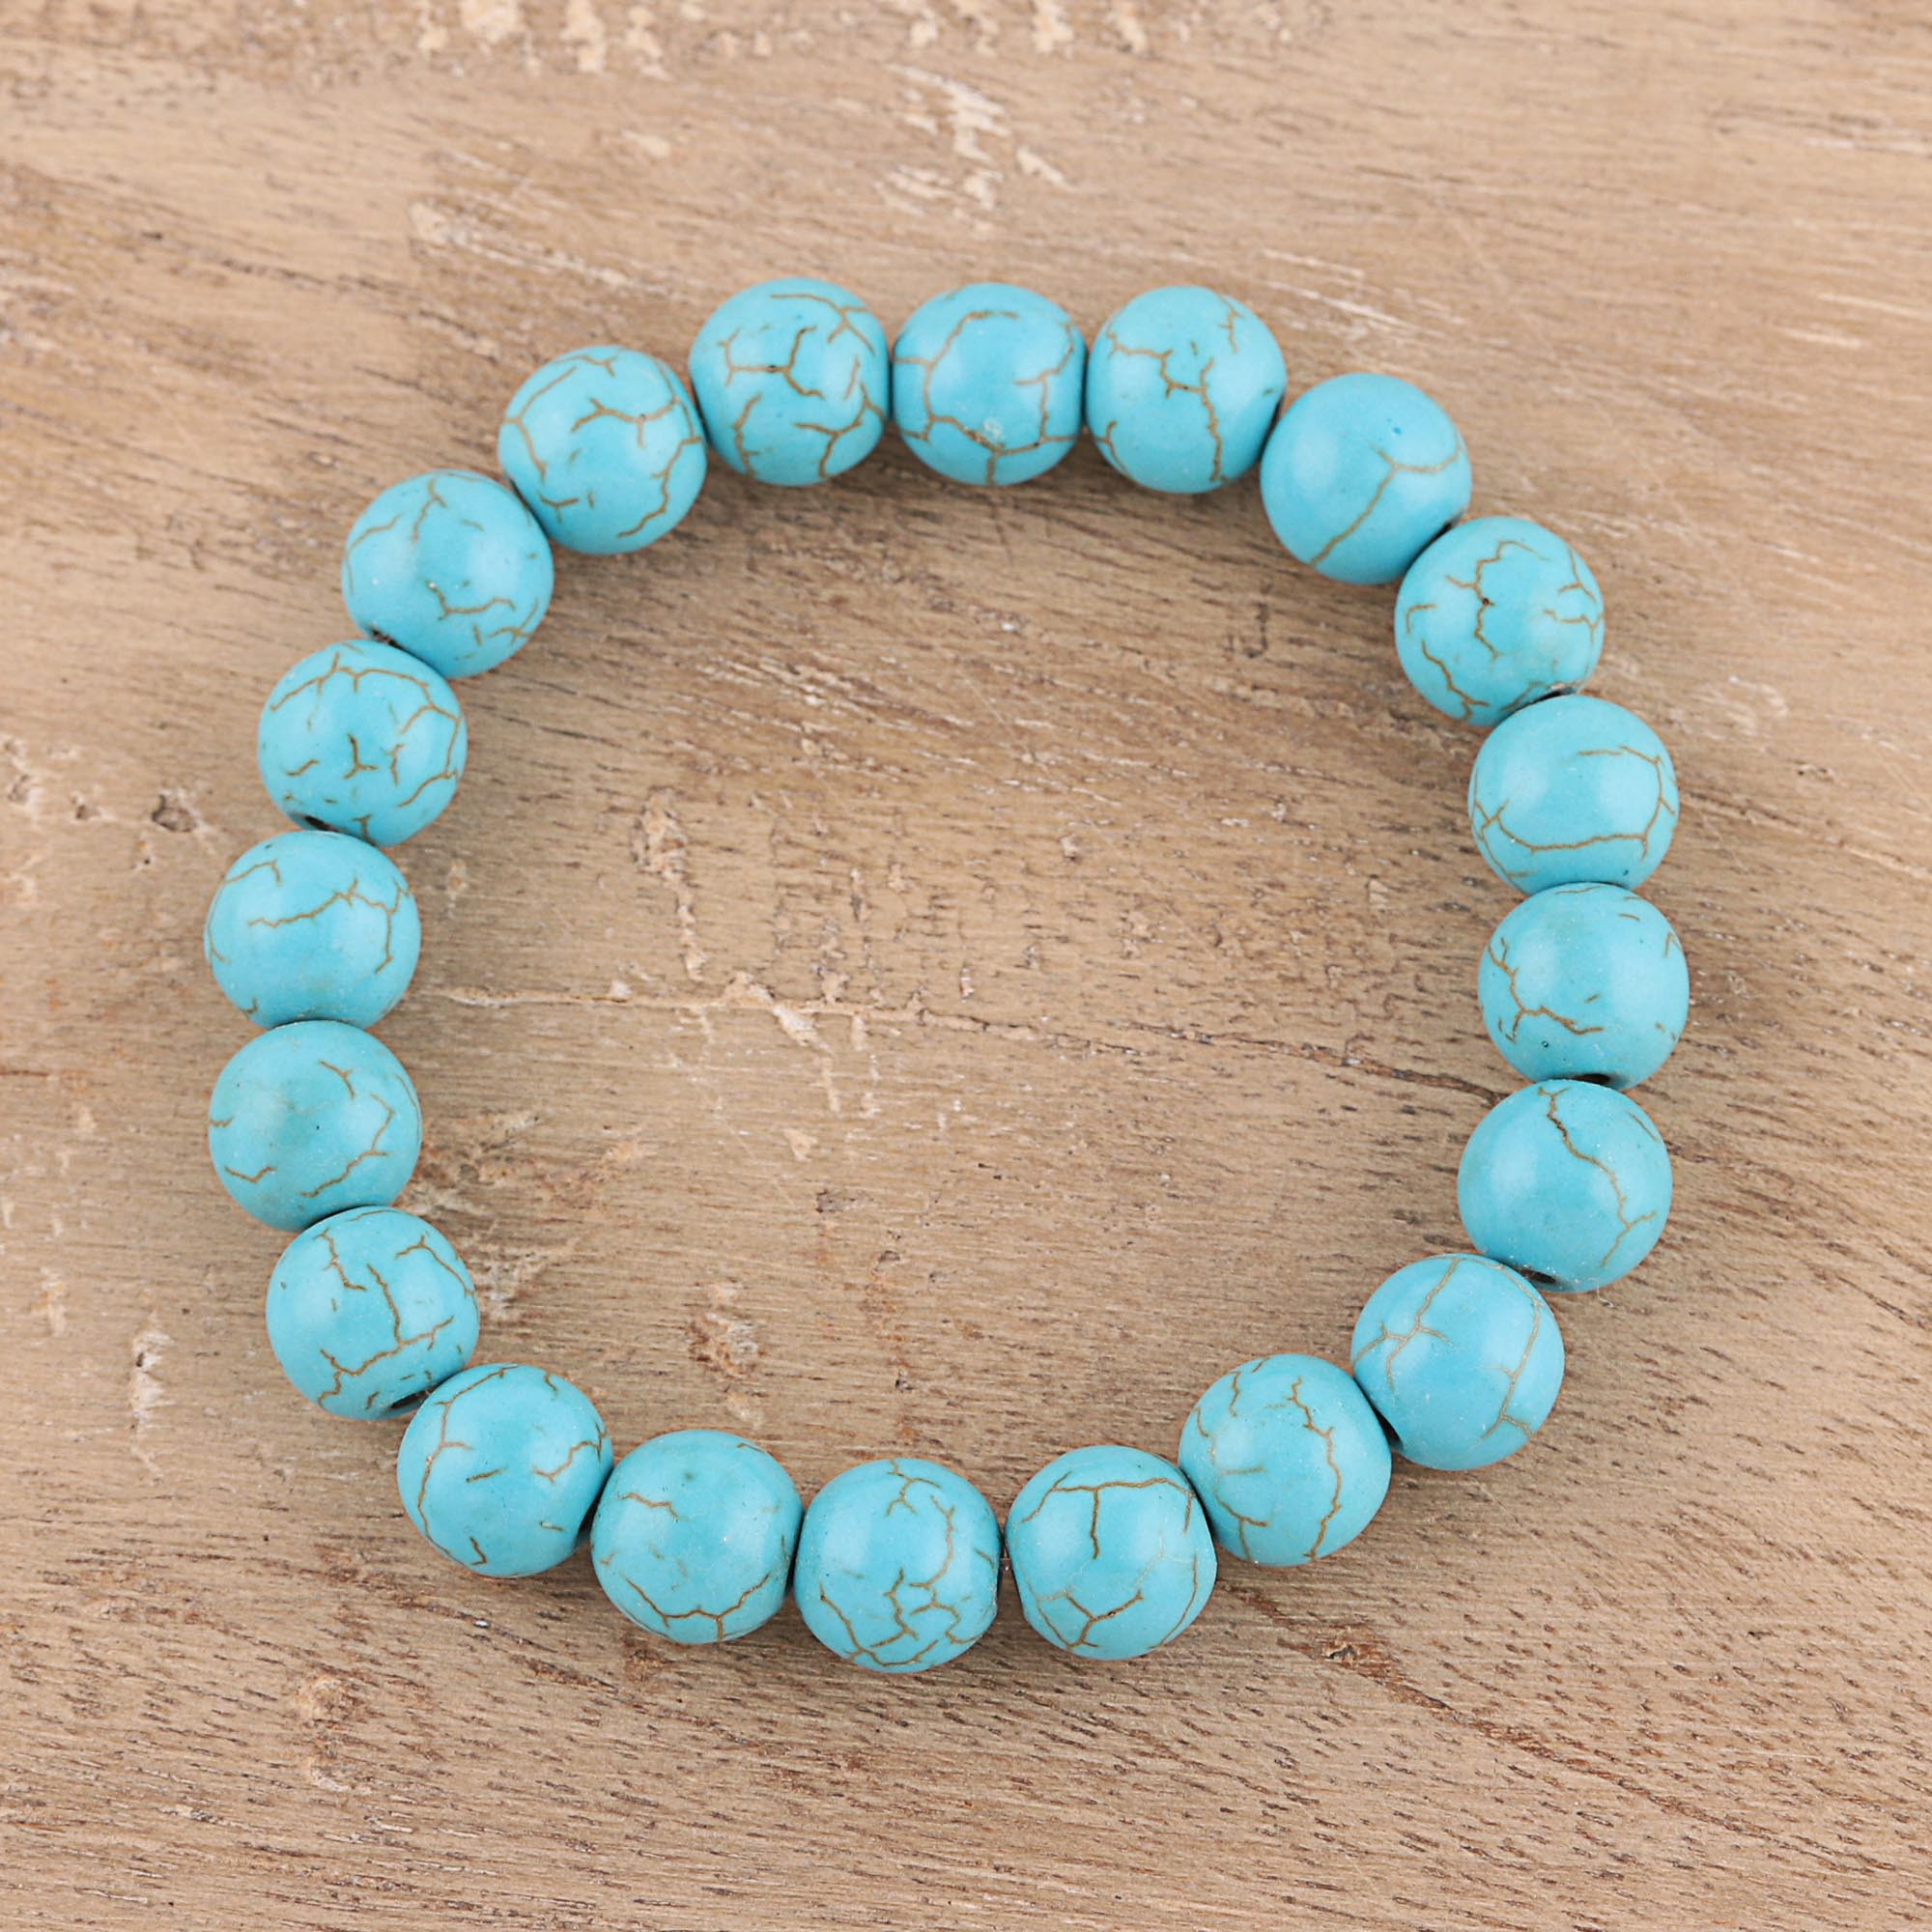 Turquoise Stone Bracelet - Stone of the Sky